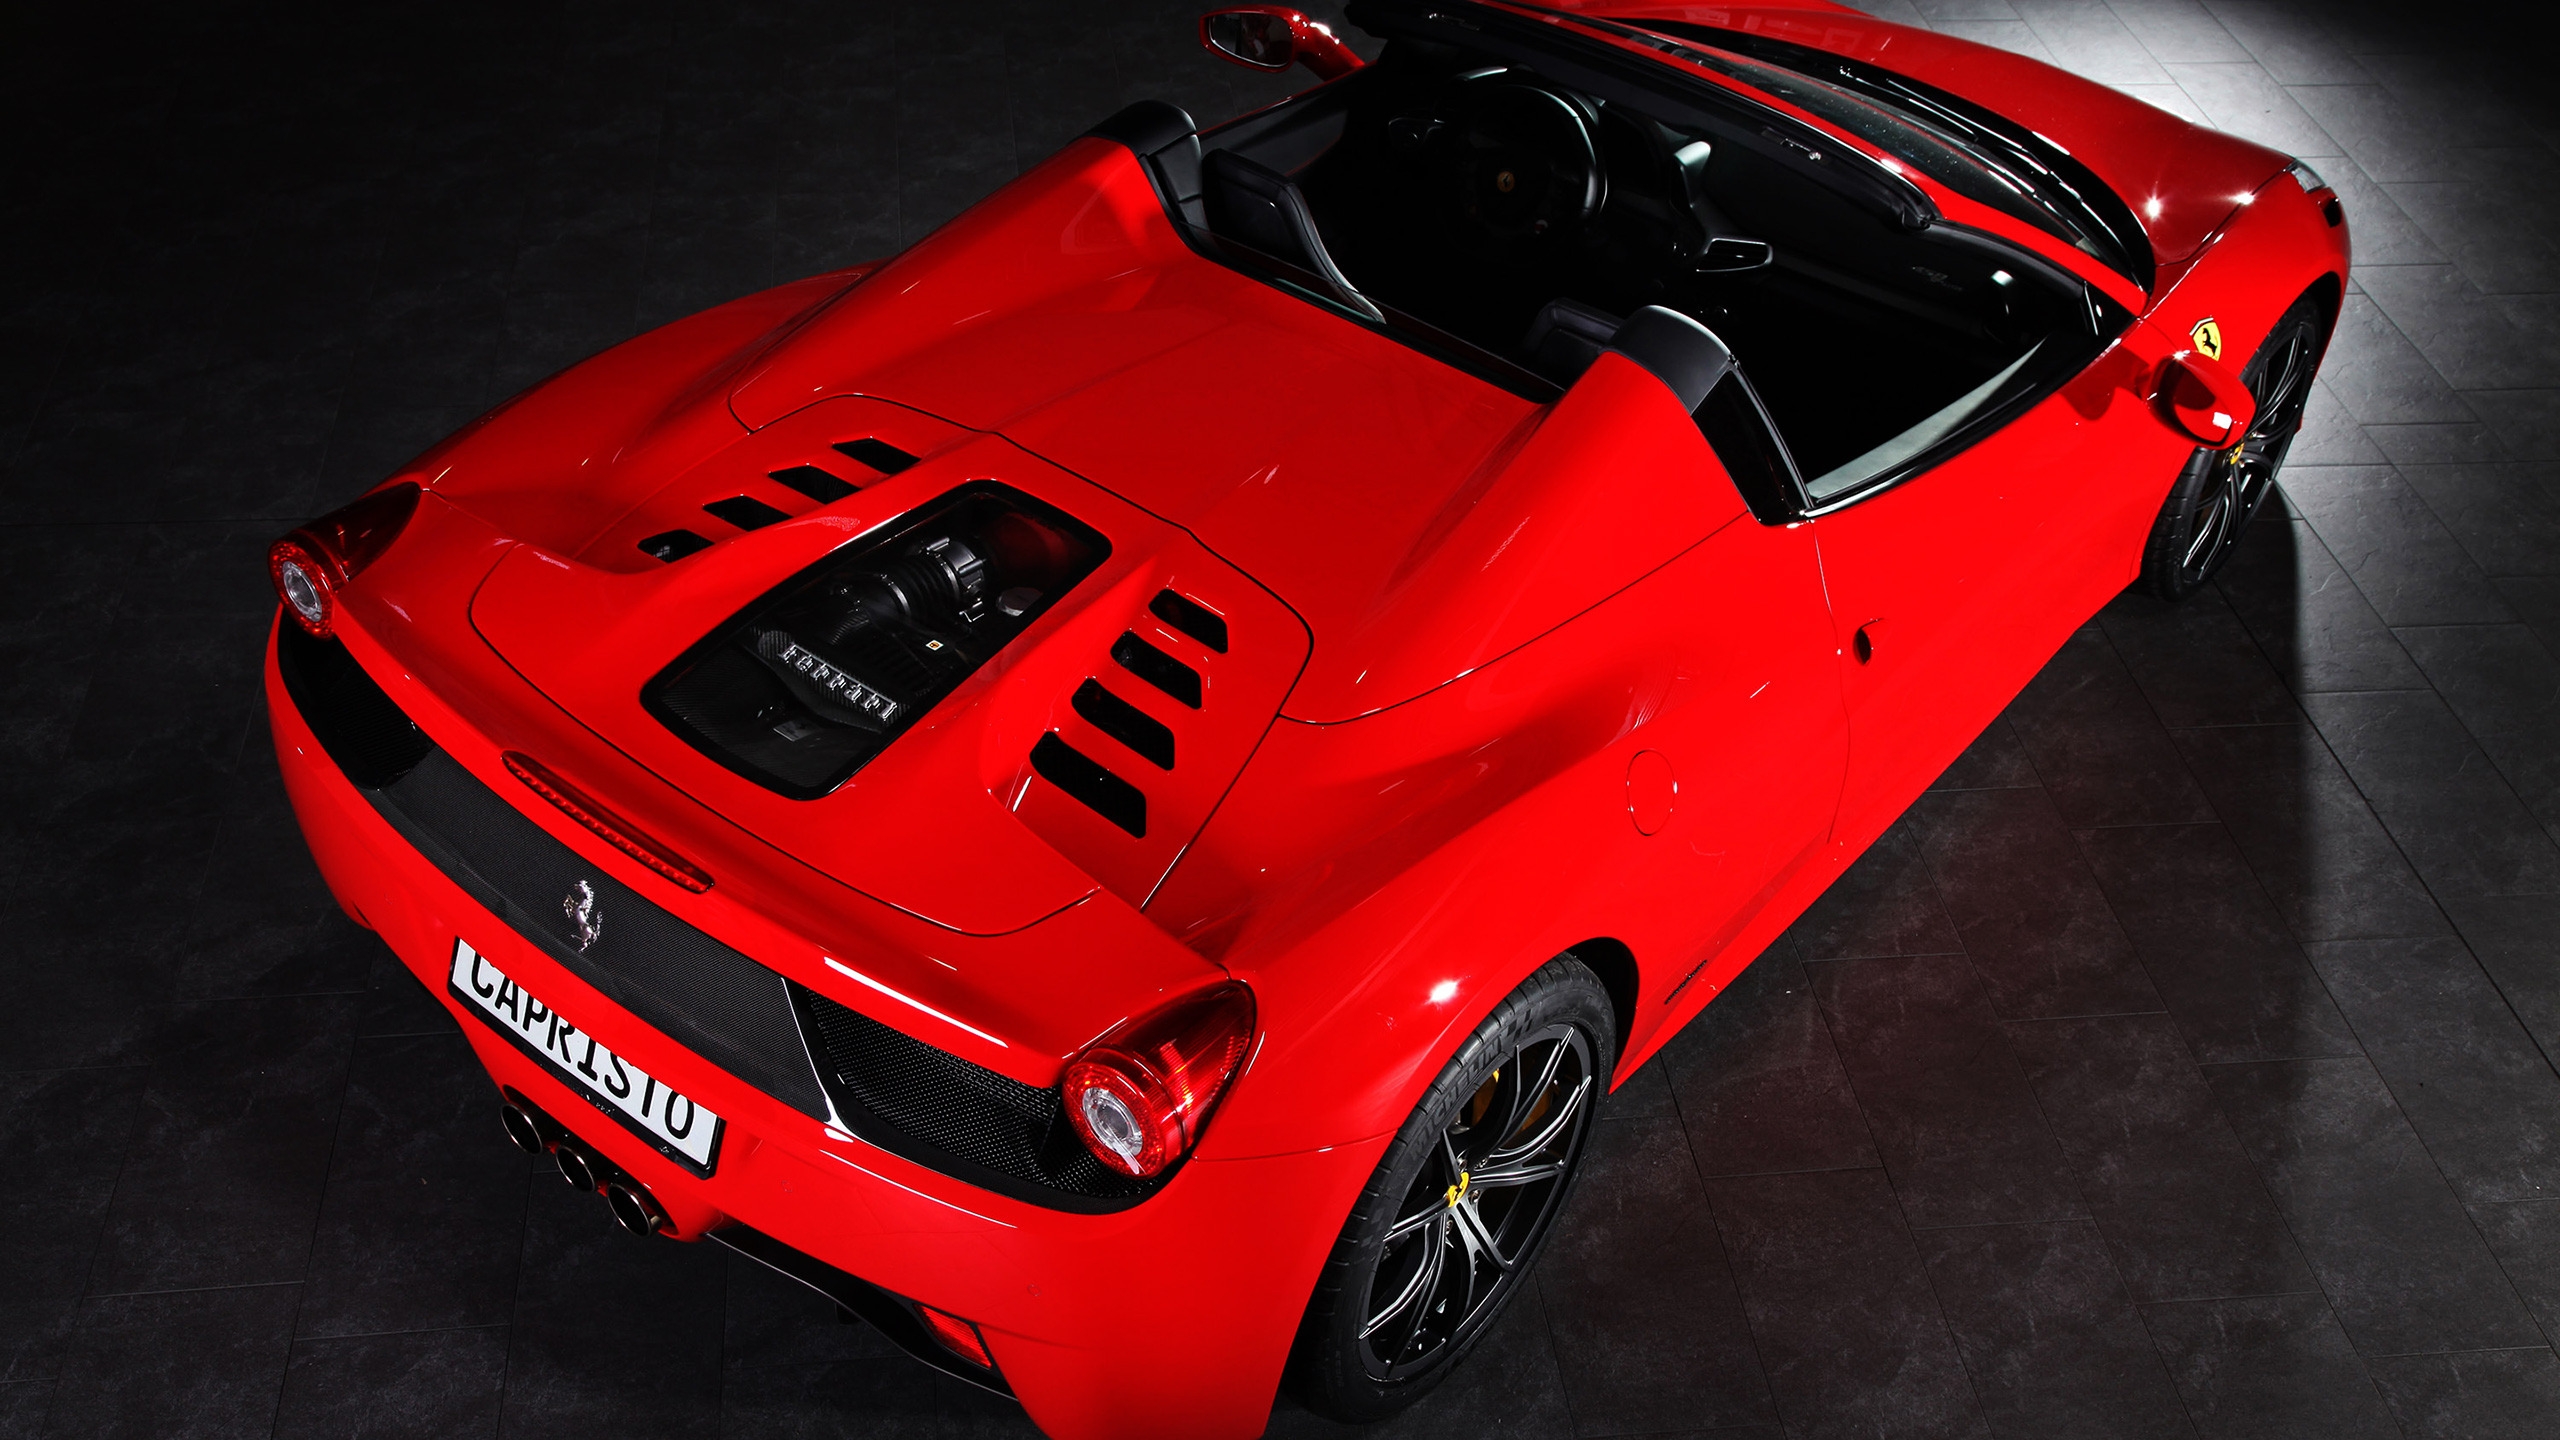 Capristo Ferrari 458 Spider for 2560x1440 HDTV resolution